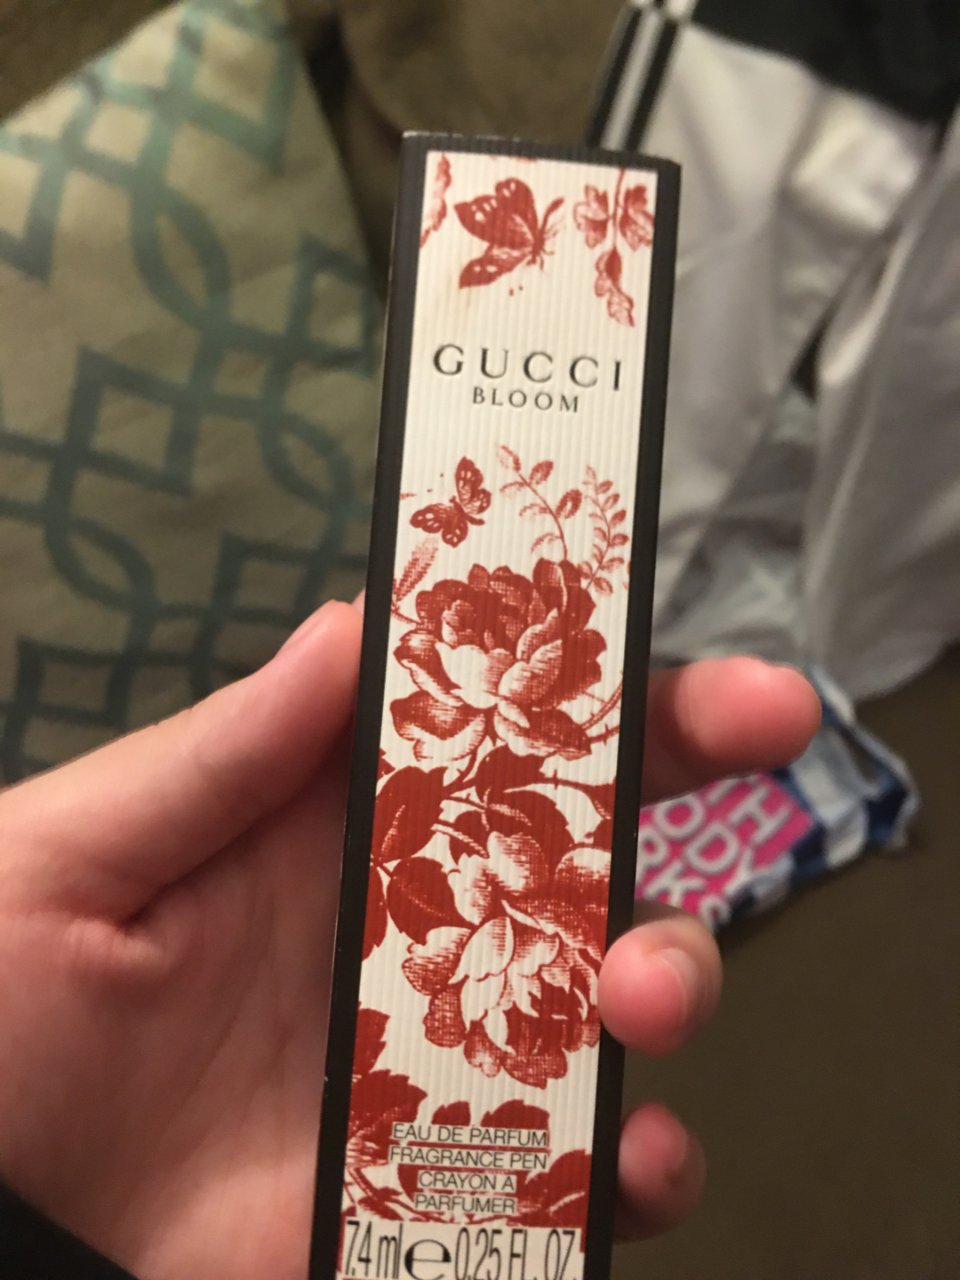 Gucci bloom